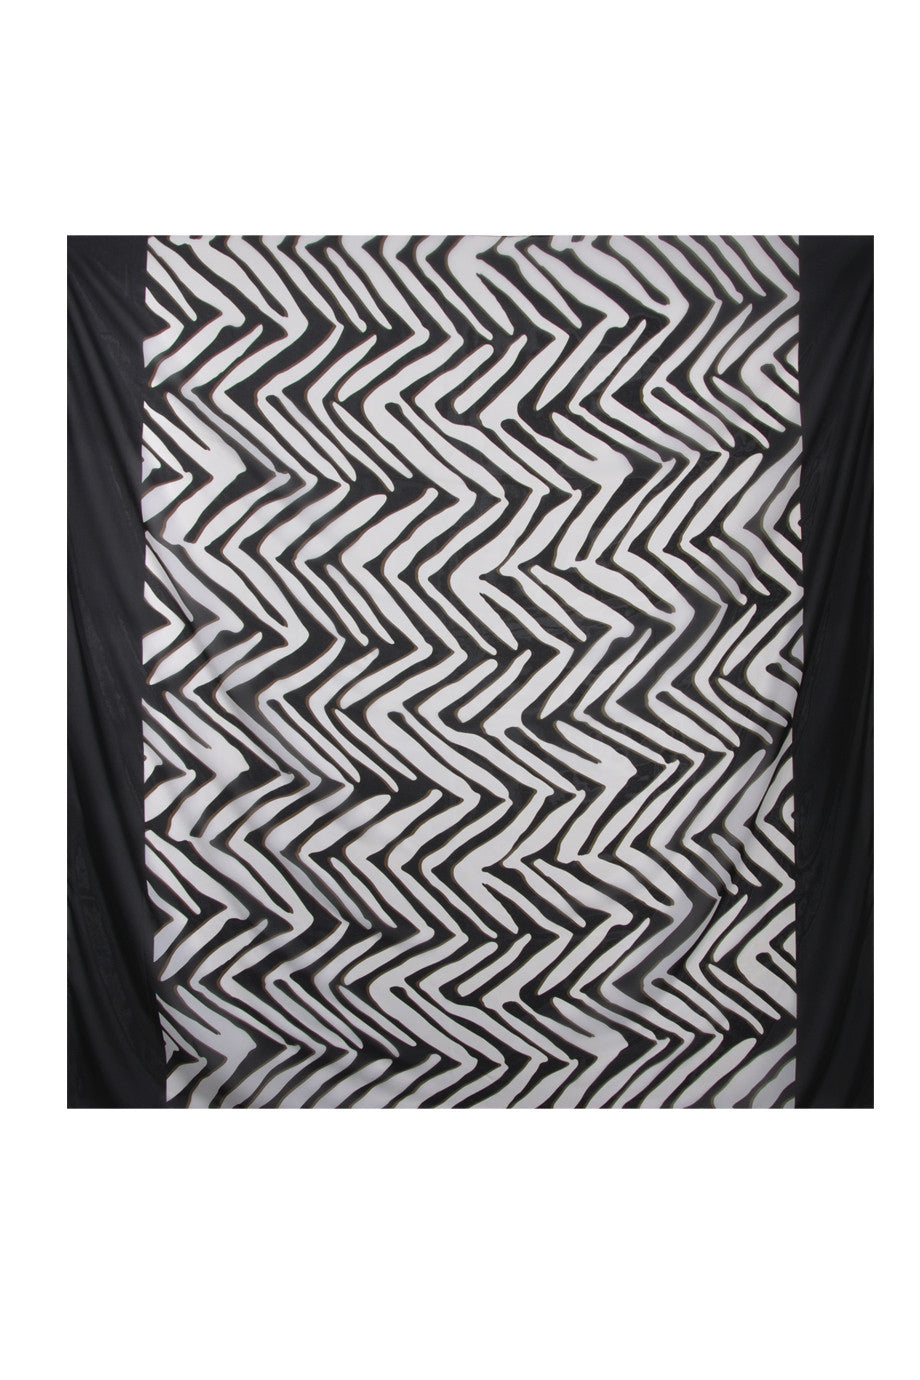 GOTTEX ZEBRA Black & White Printed Woman Scarf – PRET-A-BEAUTE